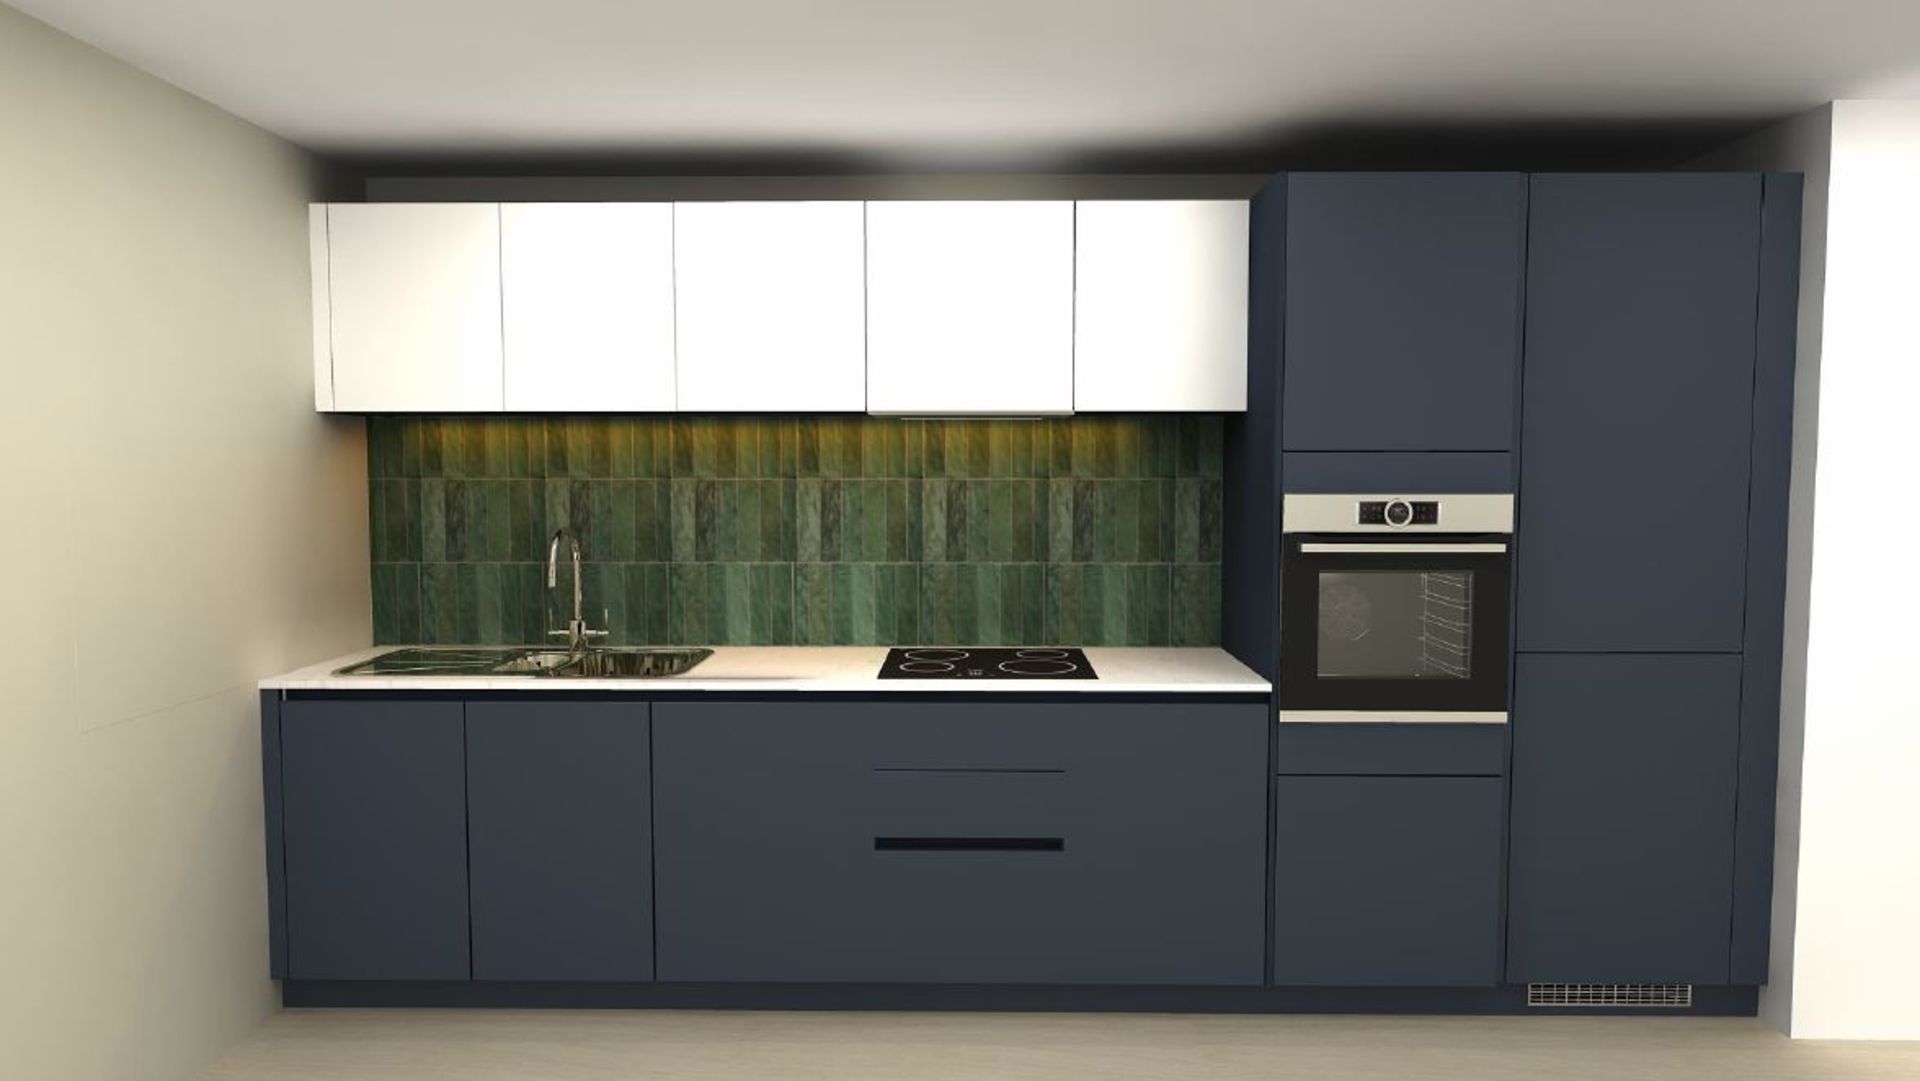 New/Unused Hatt kitchen comprising: Lacquered melamine flat panel doors in Egger Indigo Blue perfect